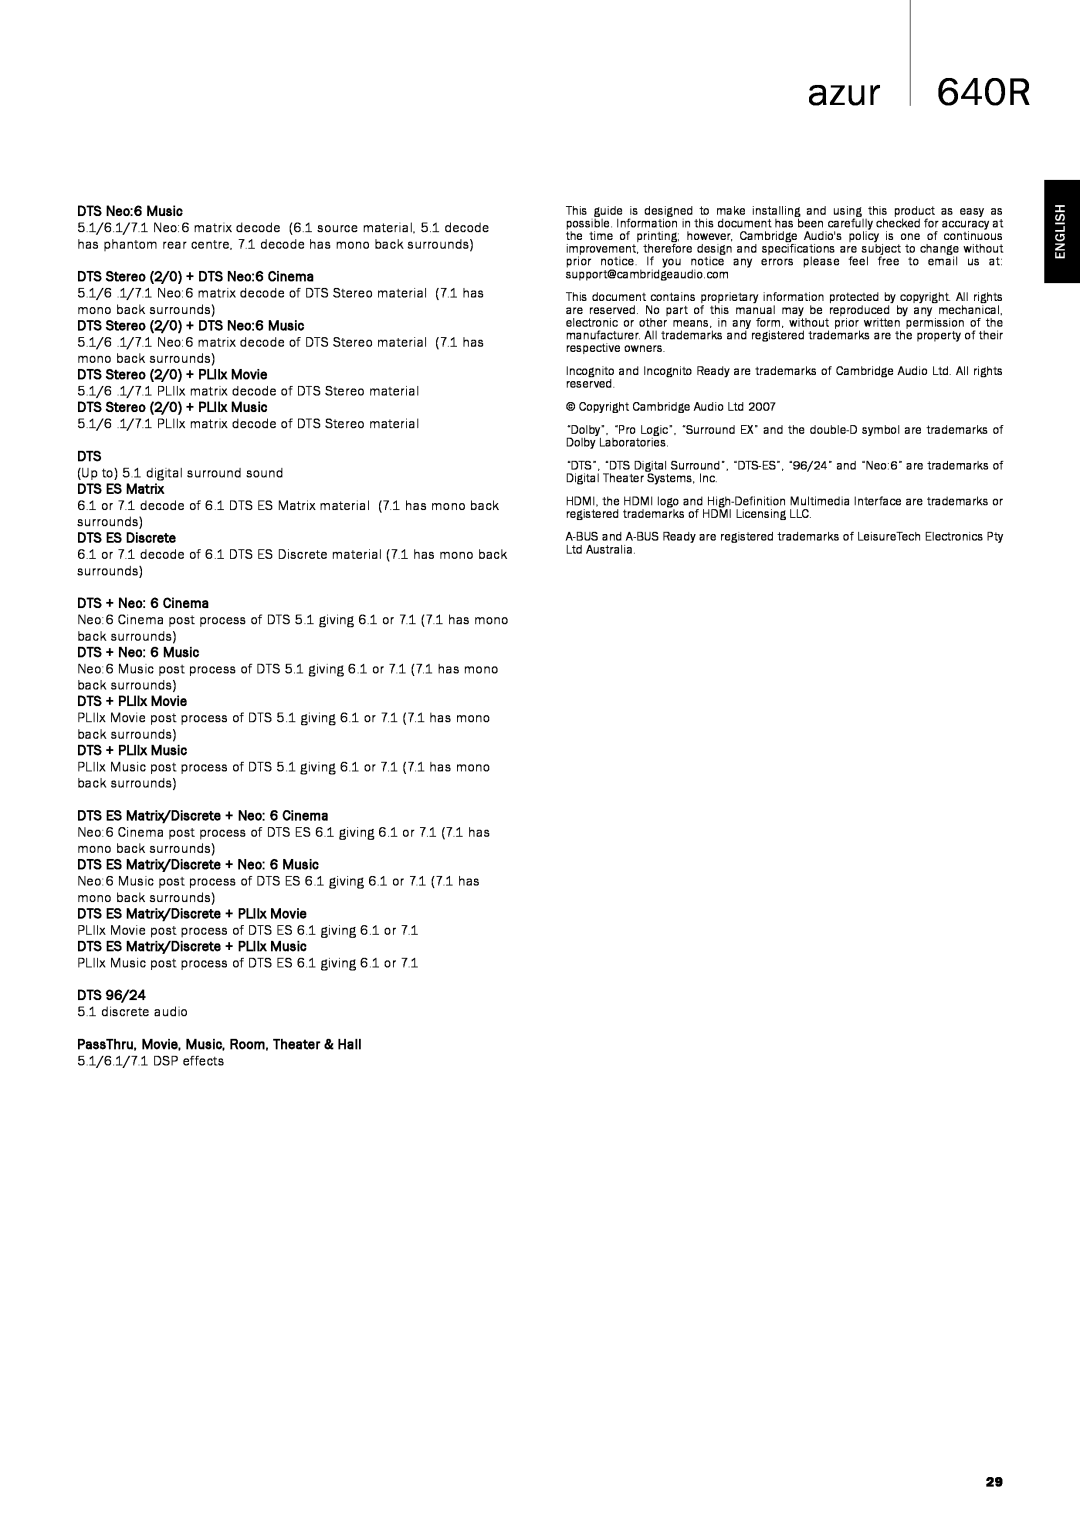 Cambridge Audio user manual azur 640R, DTS Neo:6 Music, English 